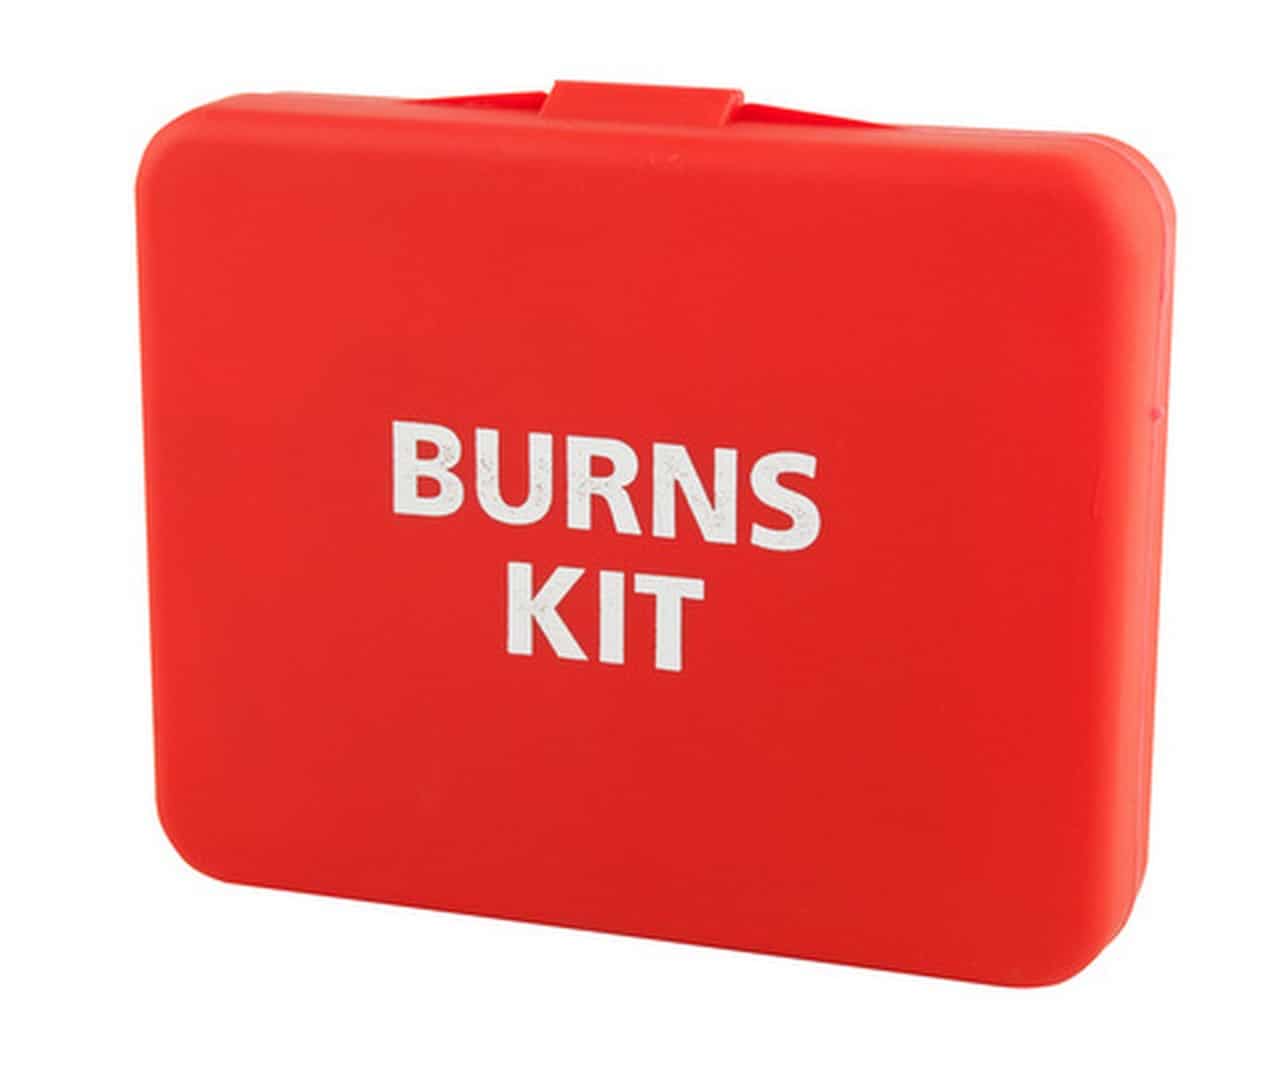 Small Burns kit